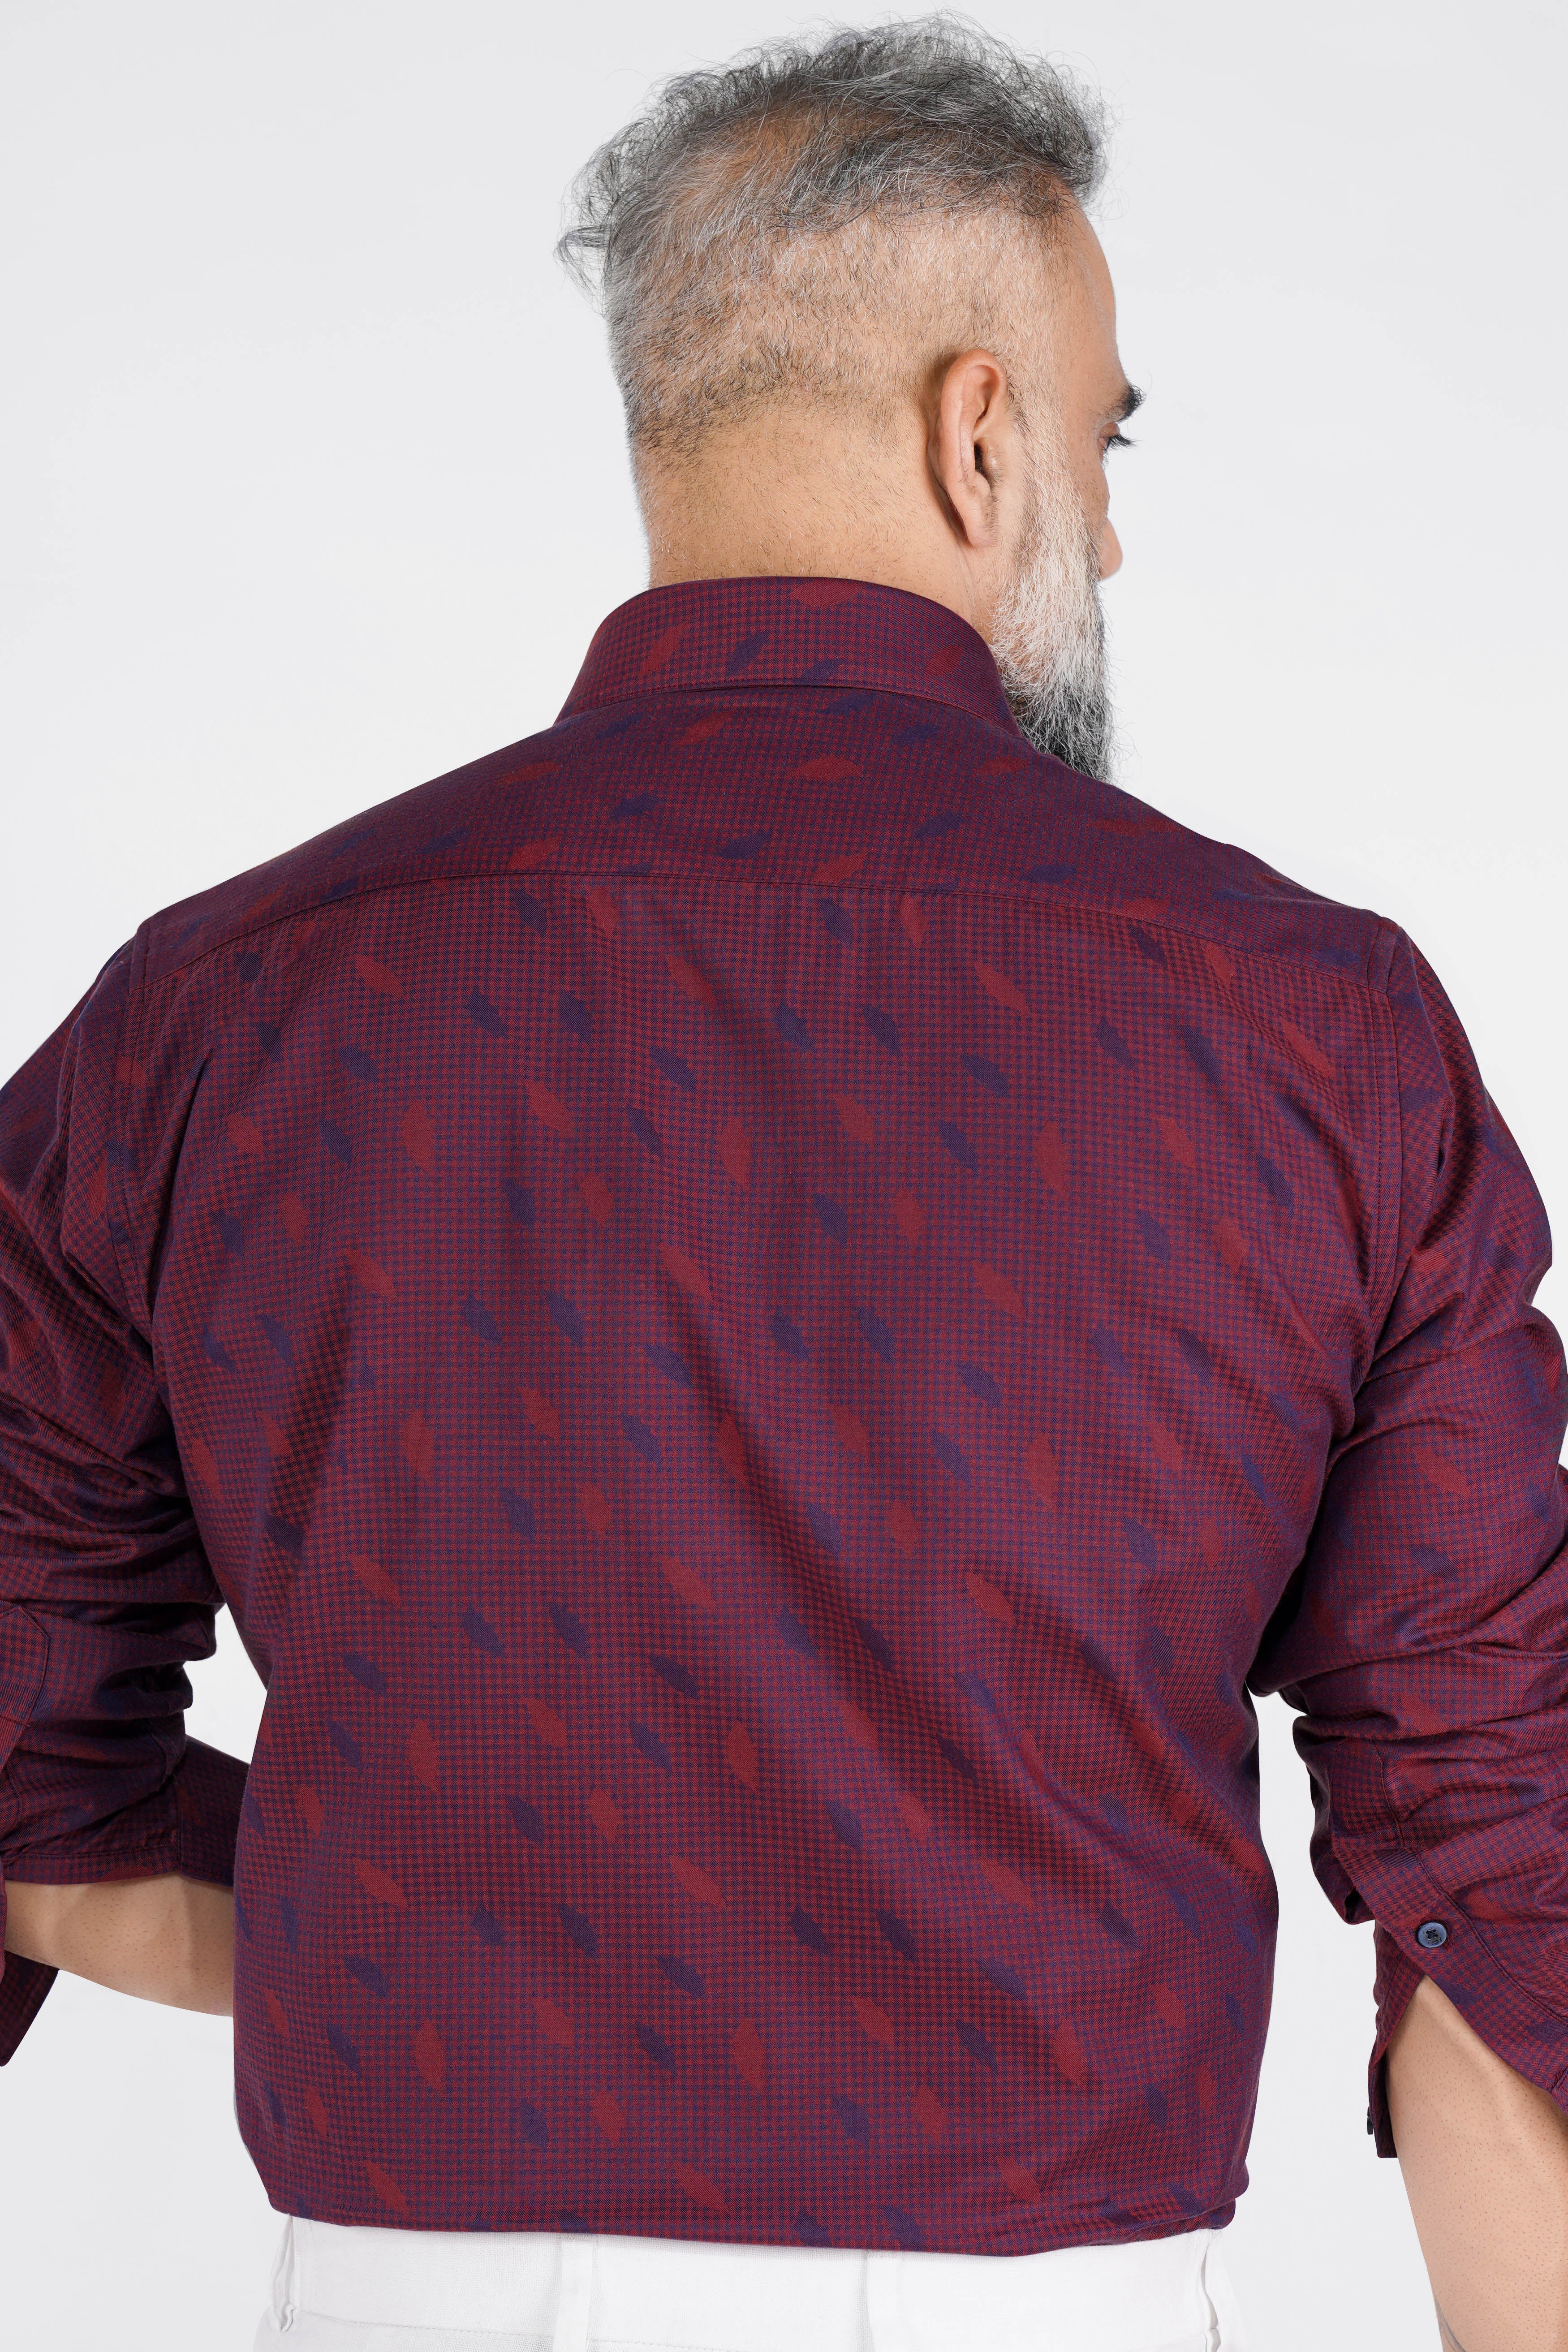 Cordovan Red and Eggplant Blue Jacquard Textured Premium Giza Cotton Shirt